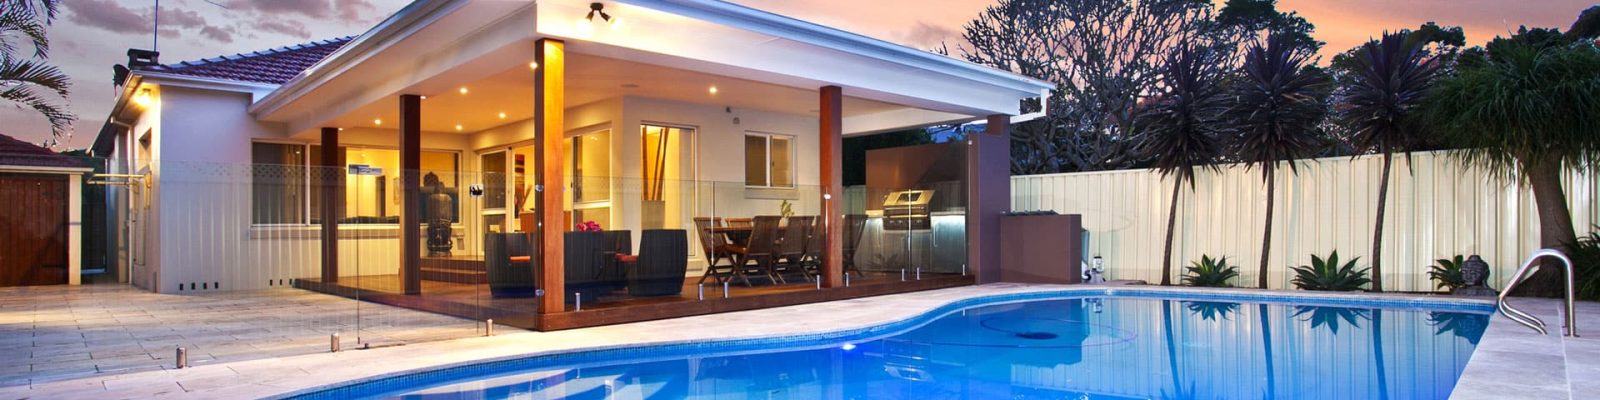 Beautiful backyard scene paid with swimming pool loans